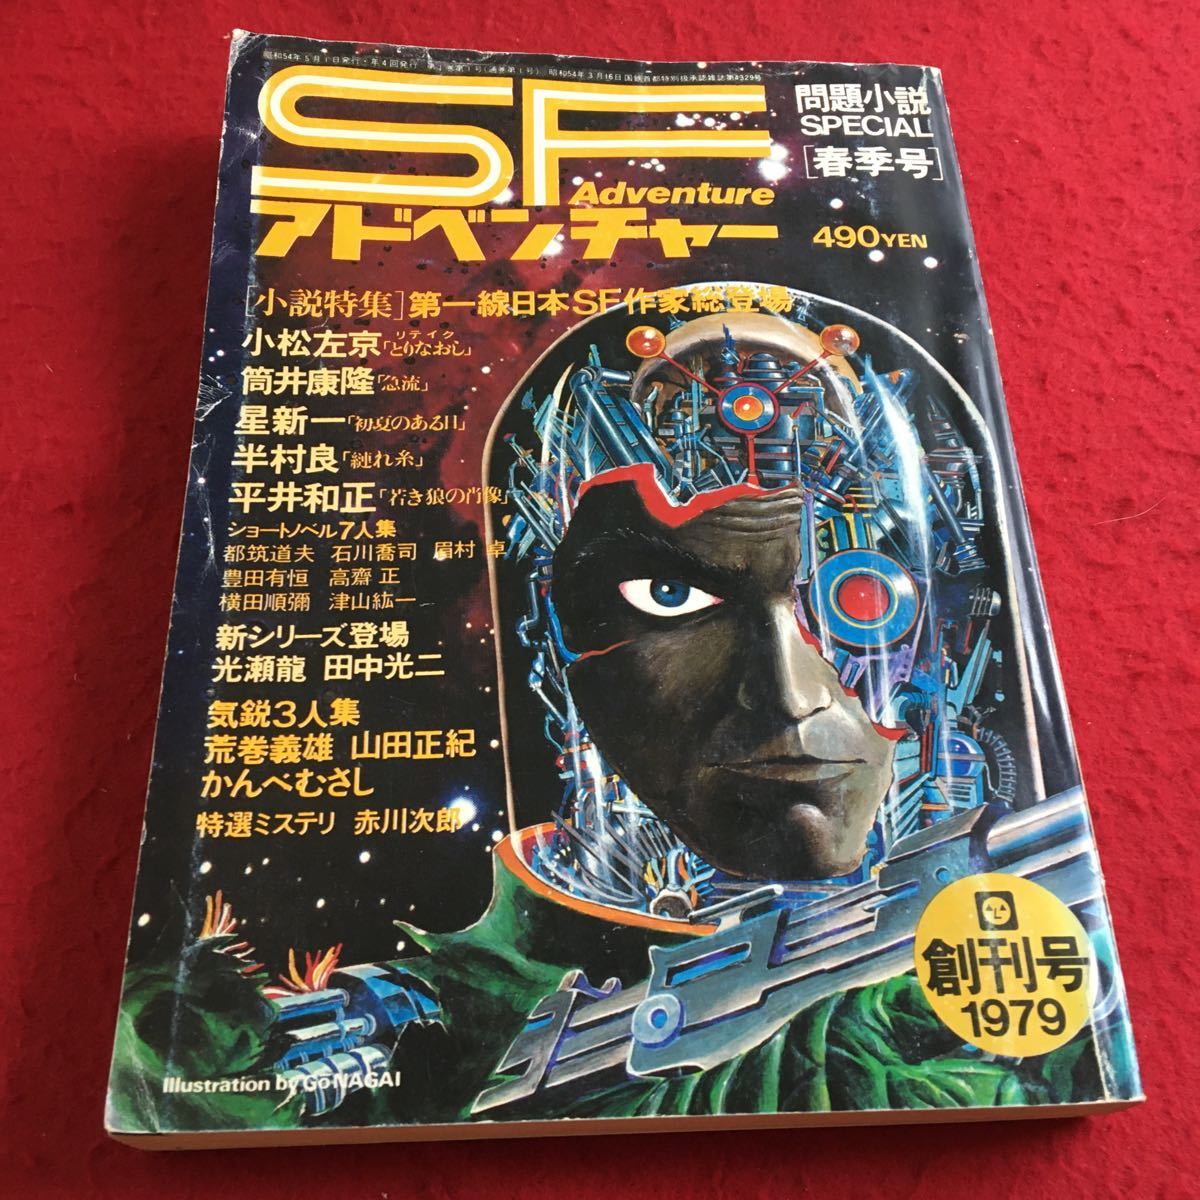 f-201※1 SFアドベンチャー 問題小説SPECIAL 第一日本SF作家登場…等 春季号 創刊号 1979 no.1_表紙全体的にキズ・汚れあり